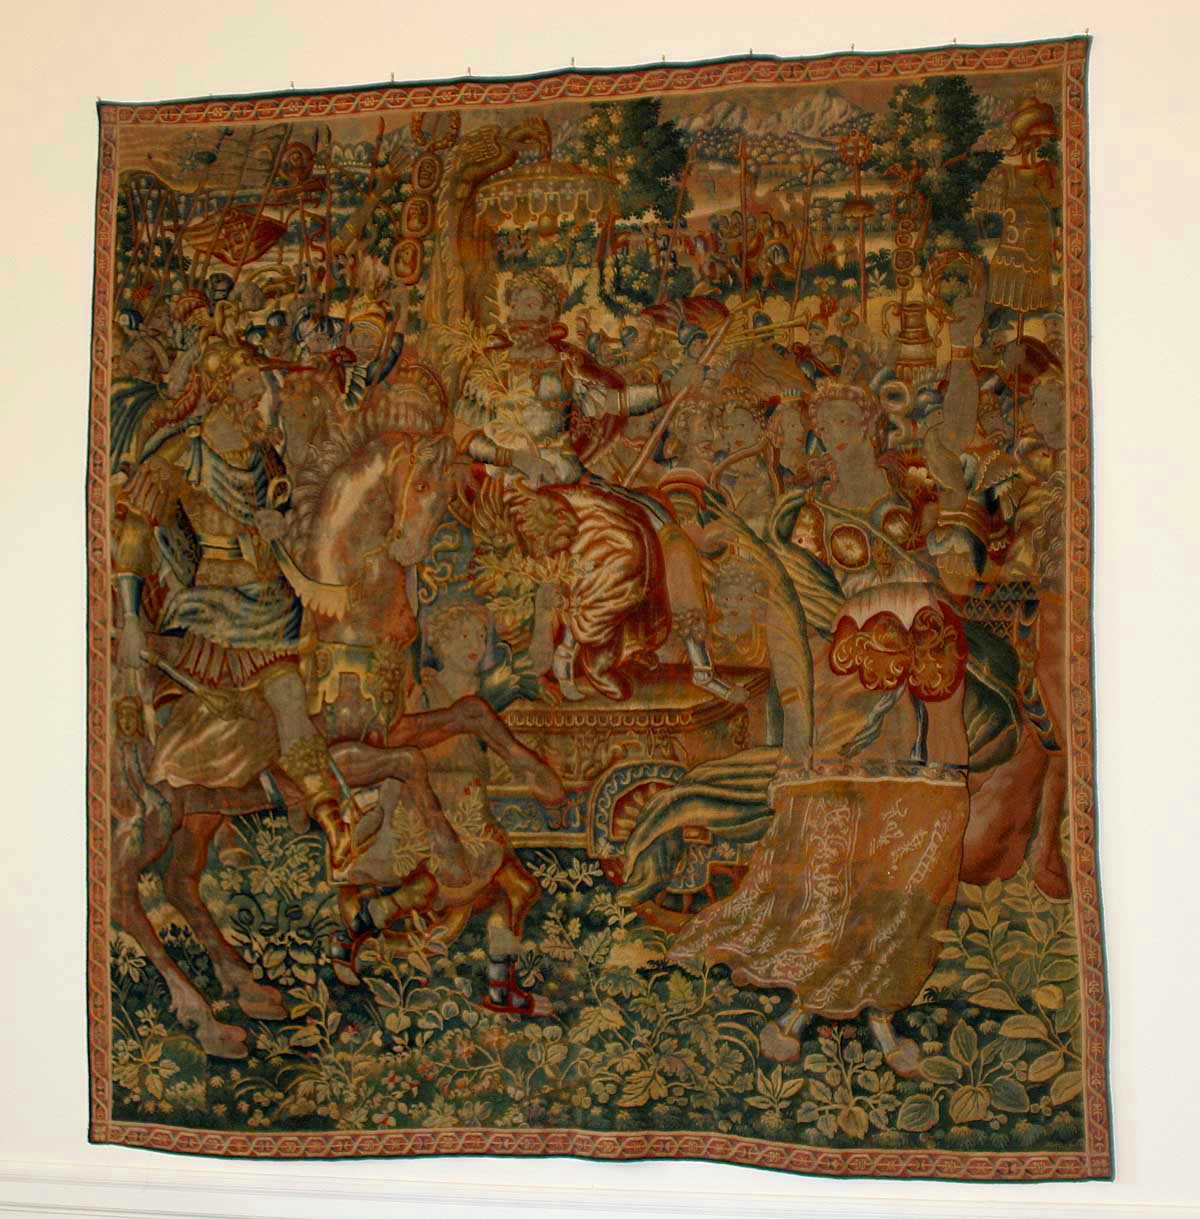 Flemish, Renaissance period tapestry